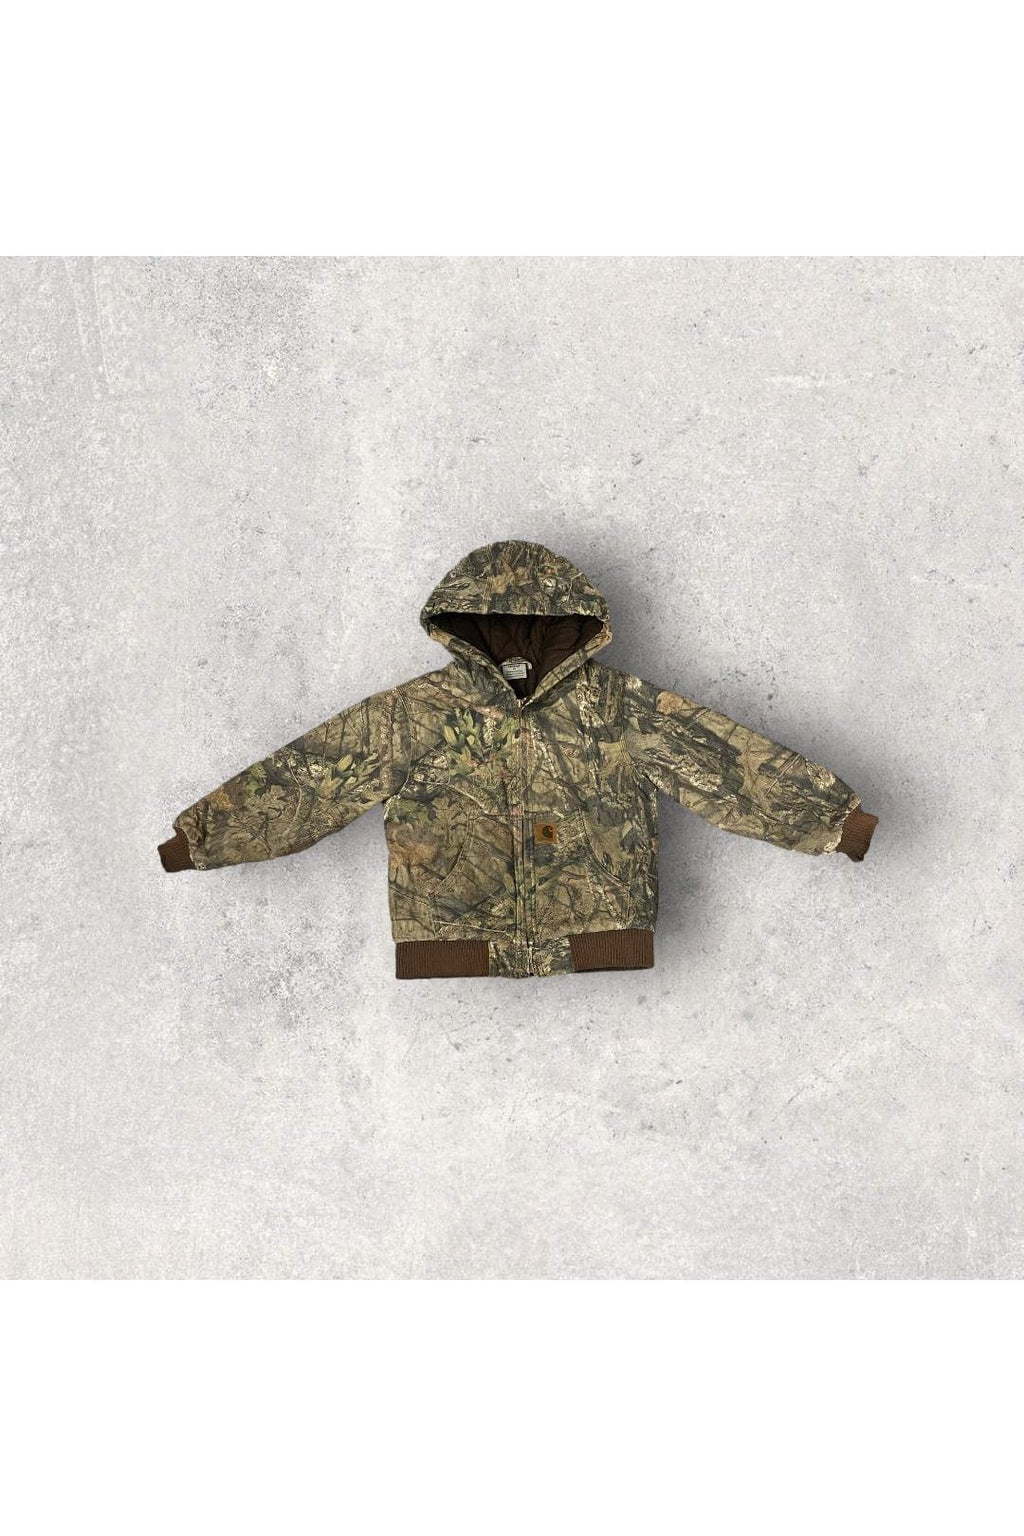 Carhartt Real Tree Camo Hooded Workwear Jacket- YTH XS (6)